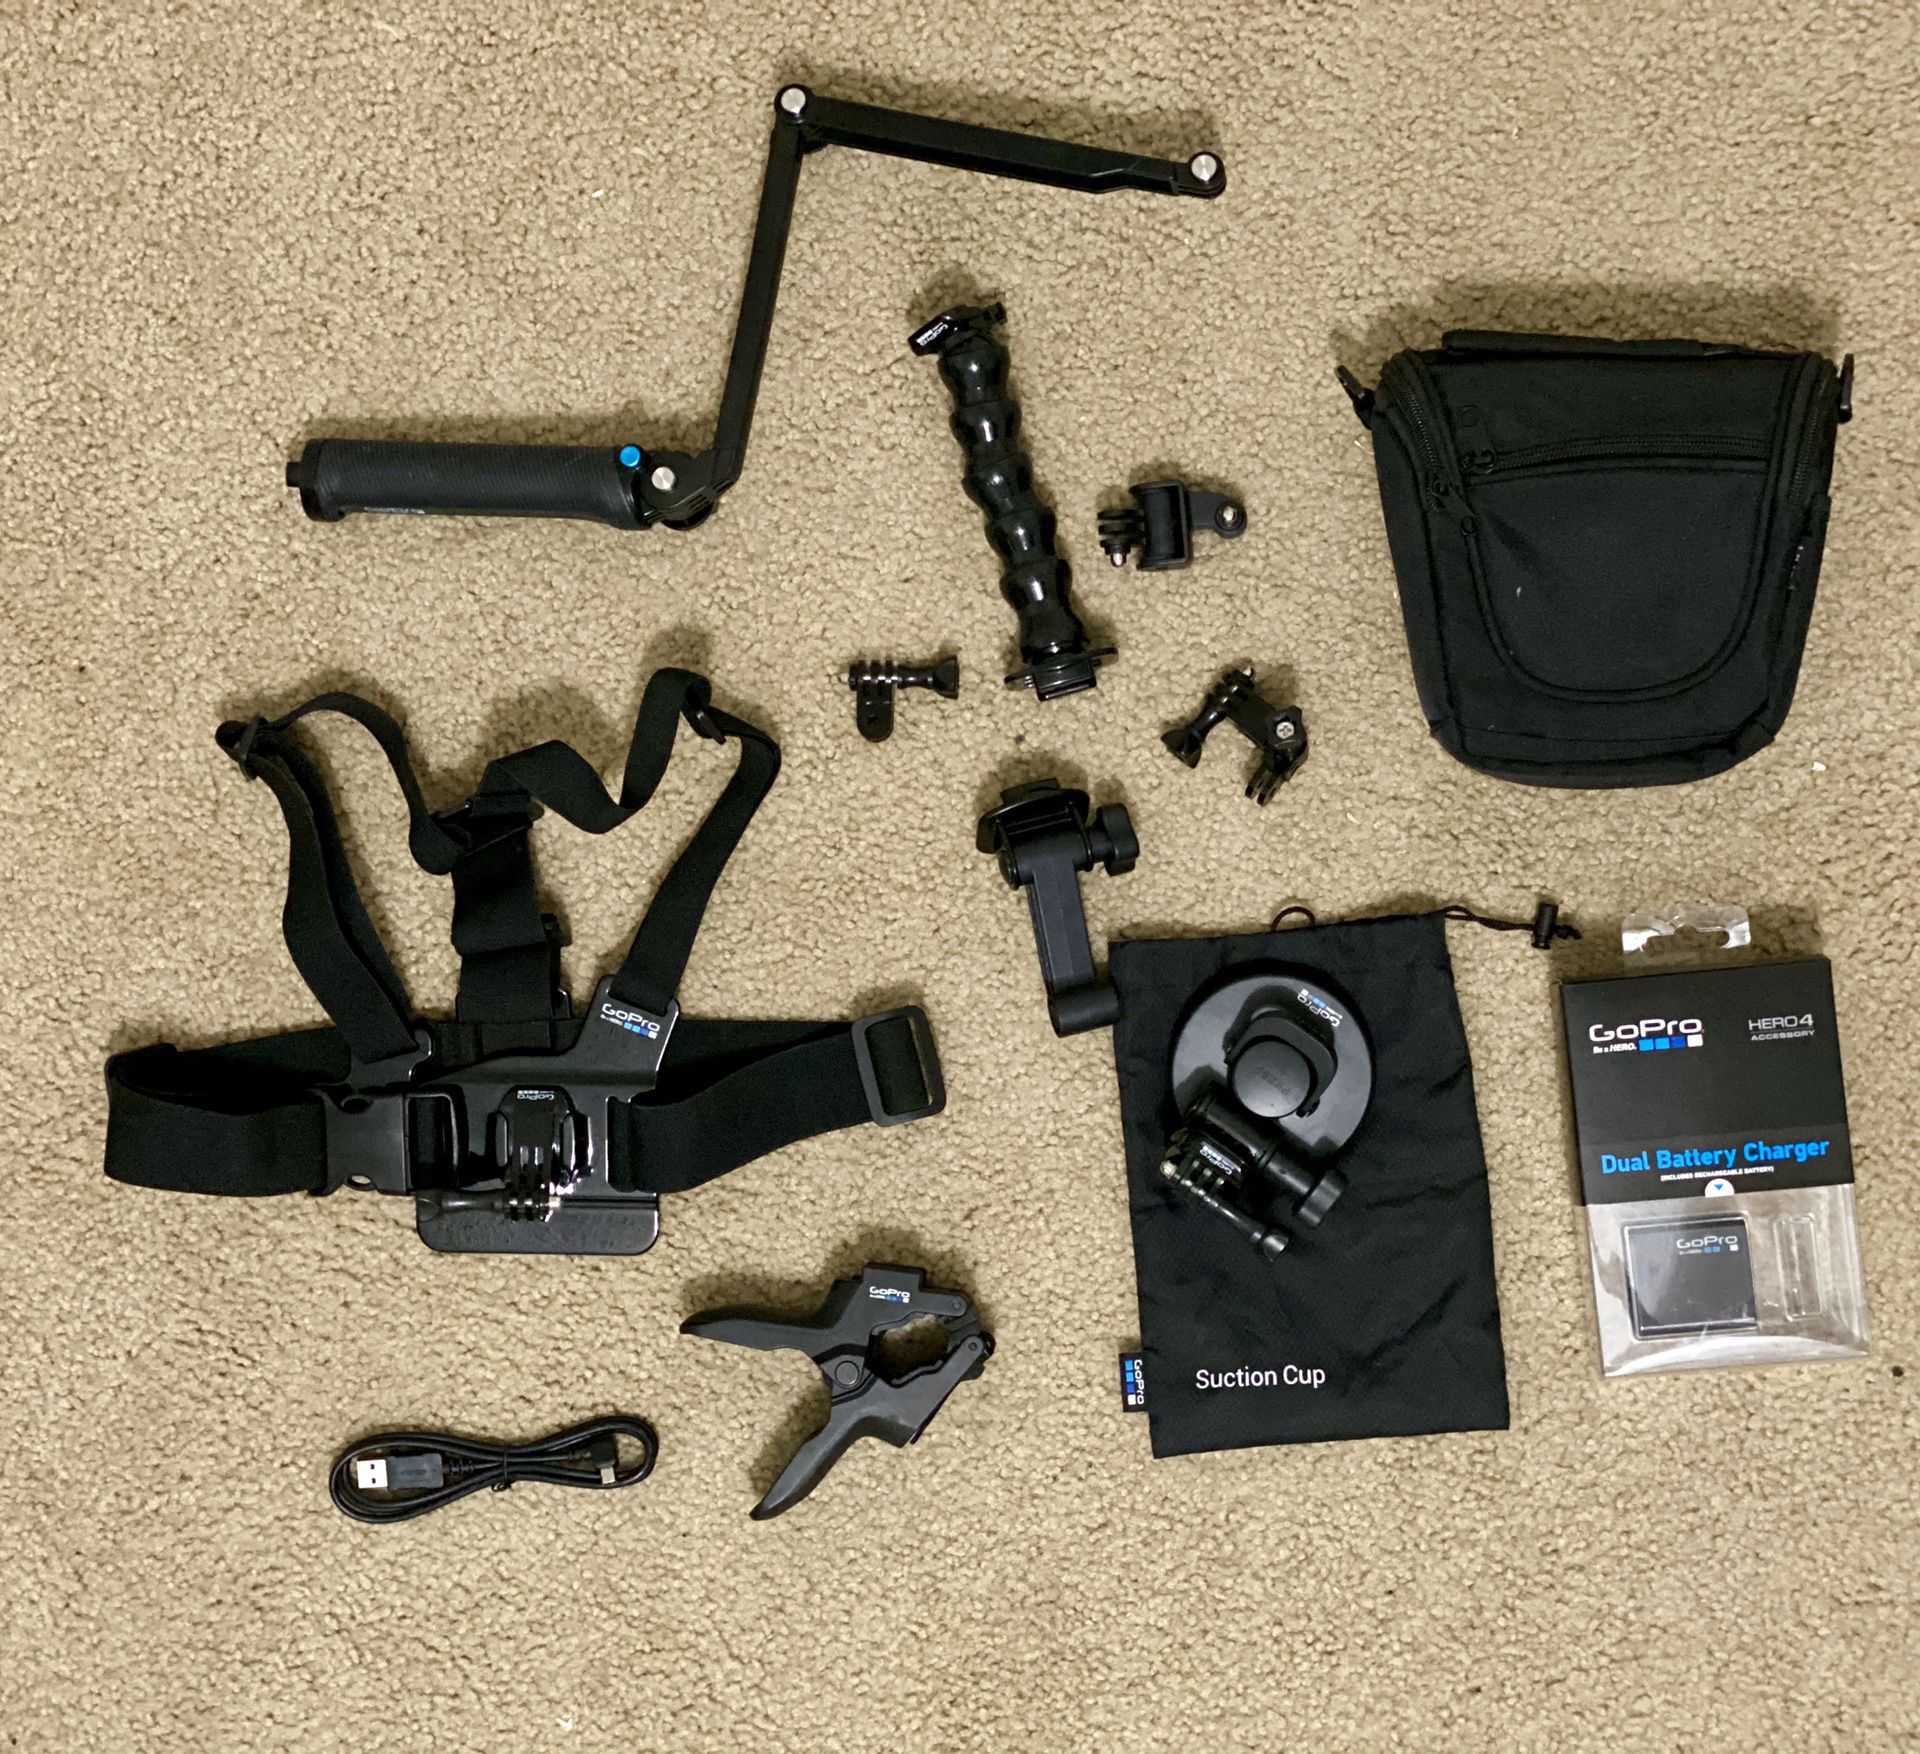 GoPro Accessories bundle $250+ value